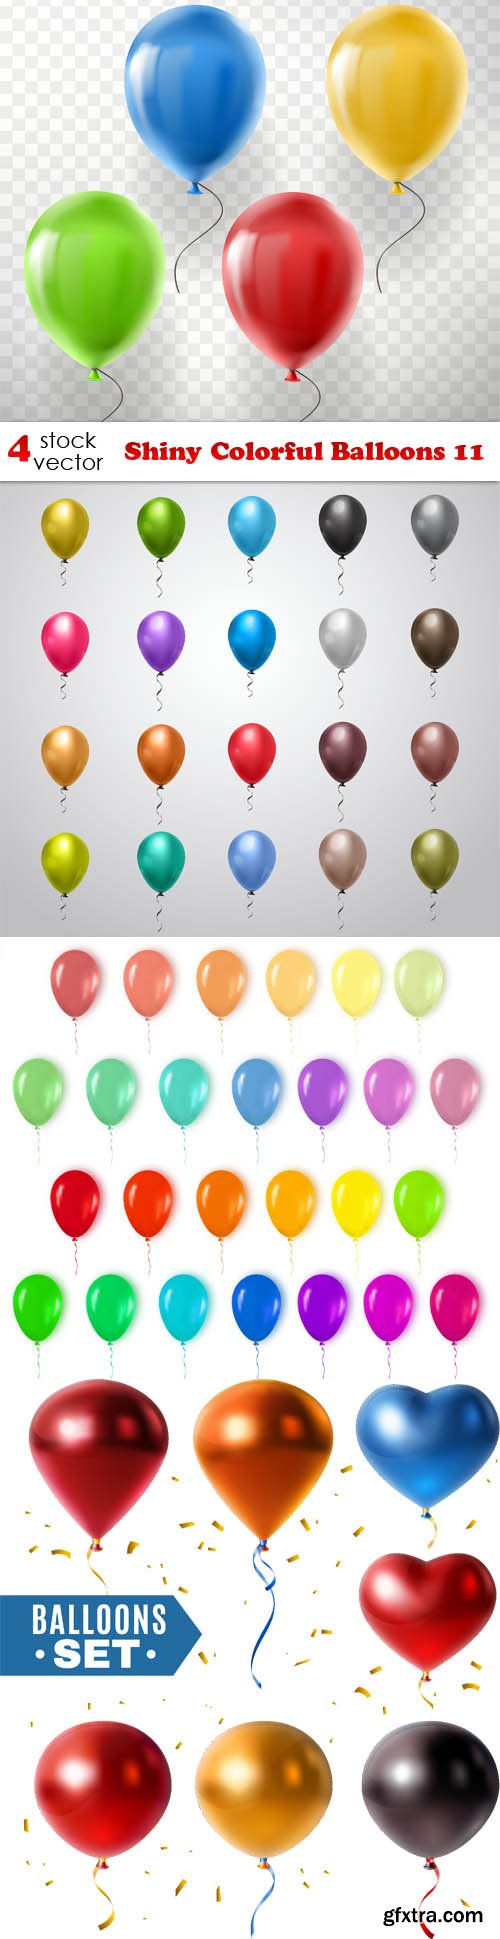 Vectors - Shiny Colorful Balloons 11